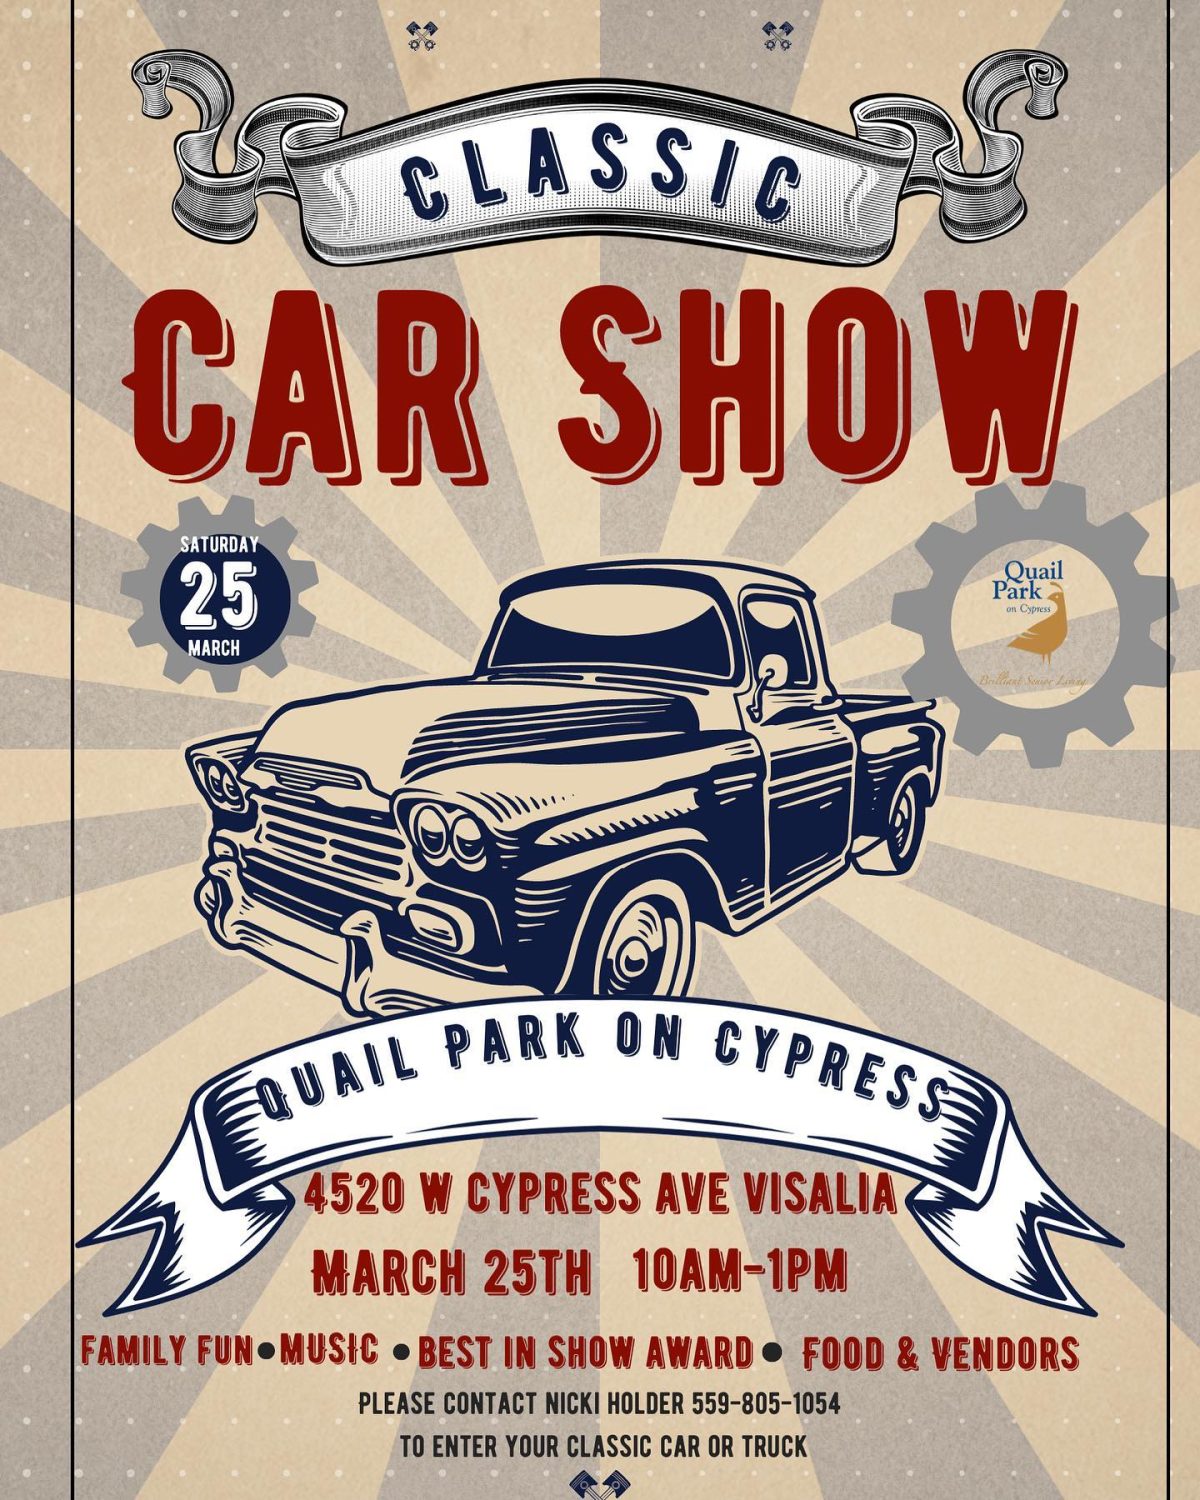 Quail Park Classic Car Show